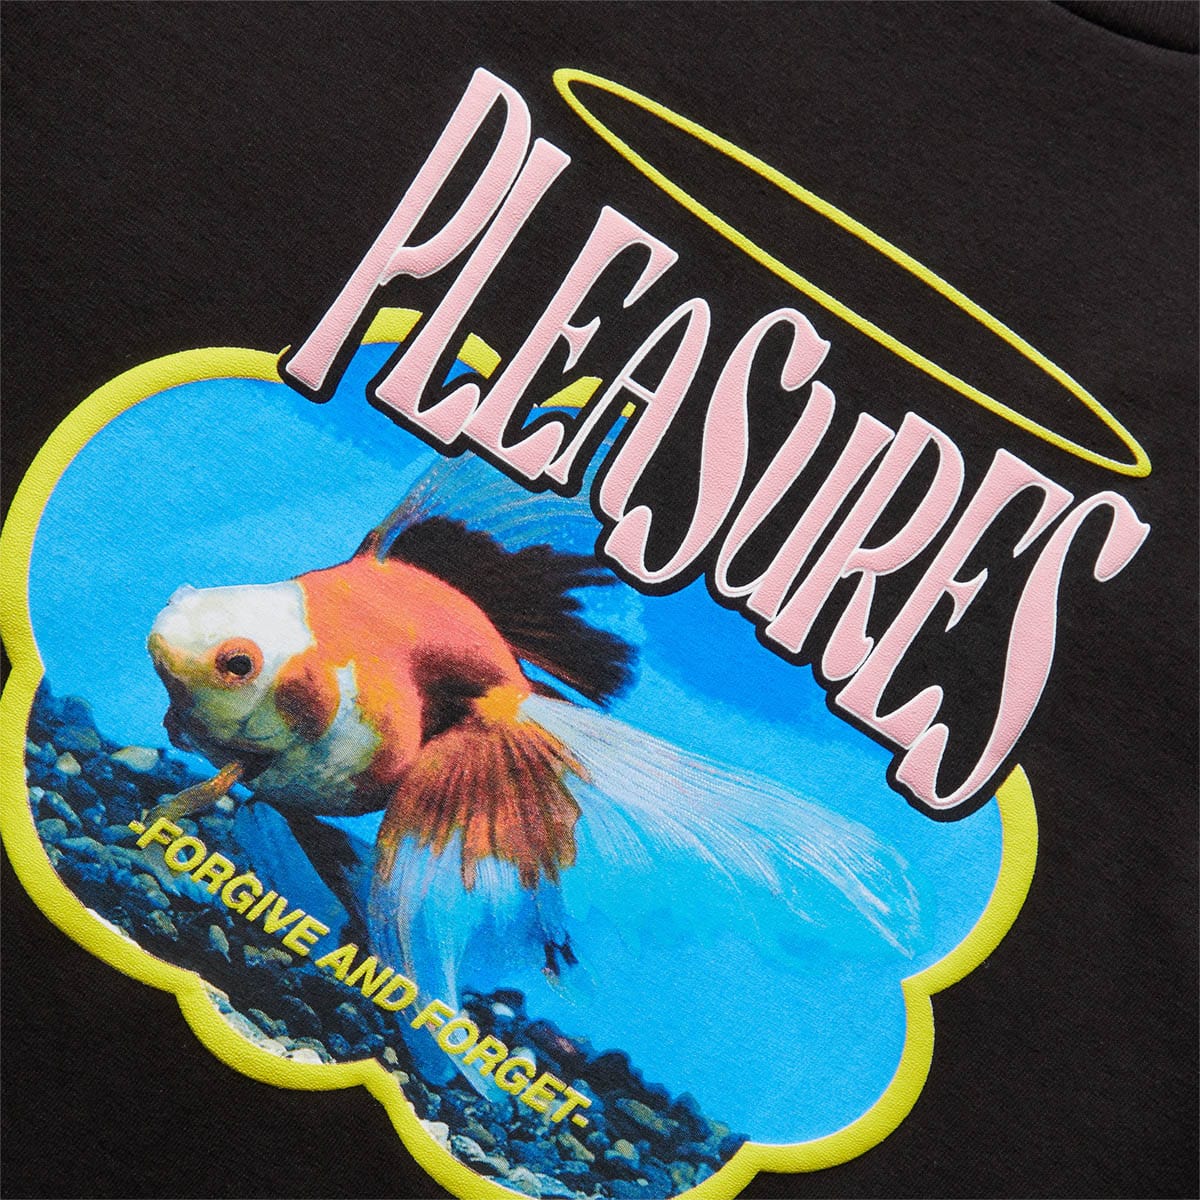 Pleasures T-Shirts BOWL T-SHIRT